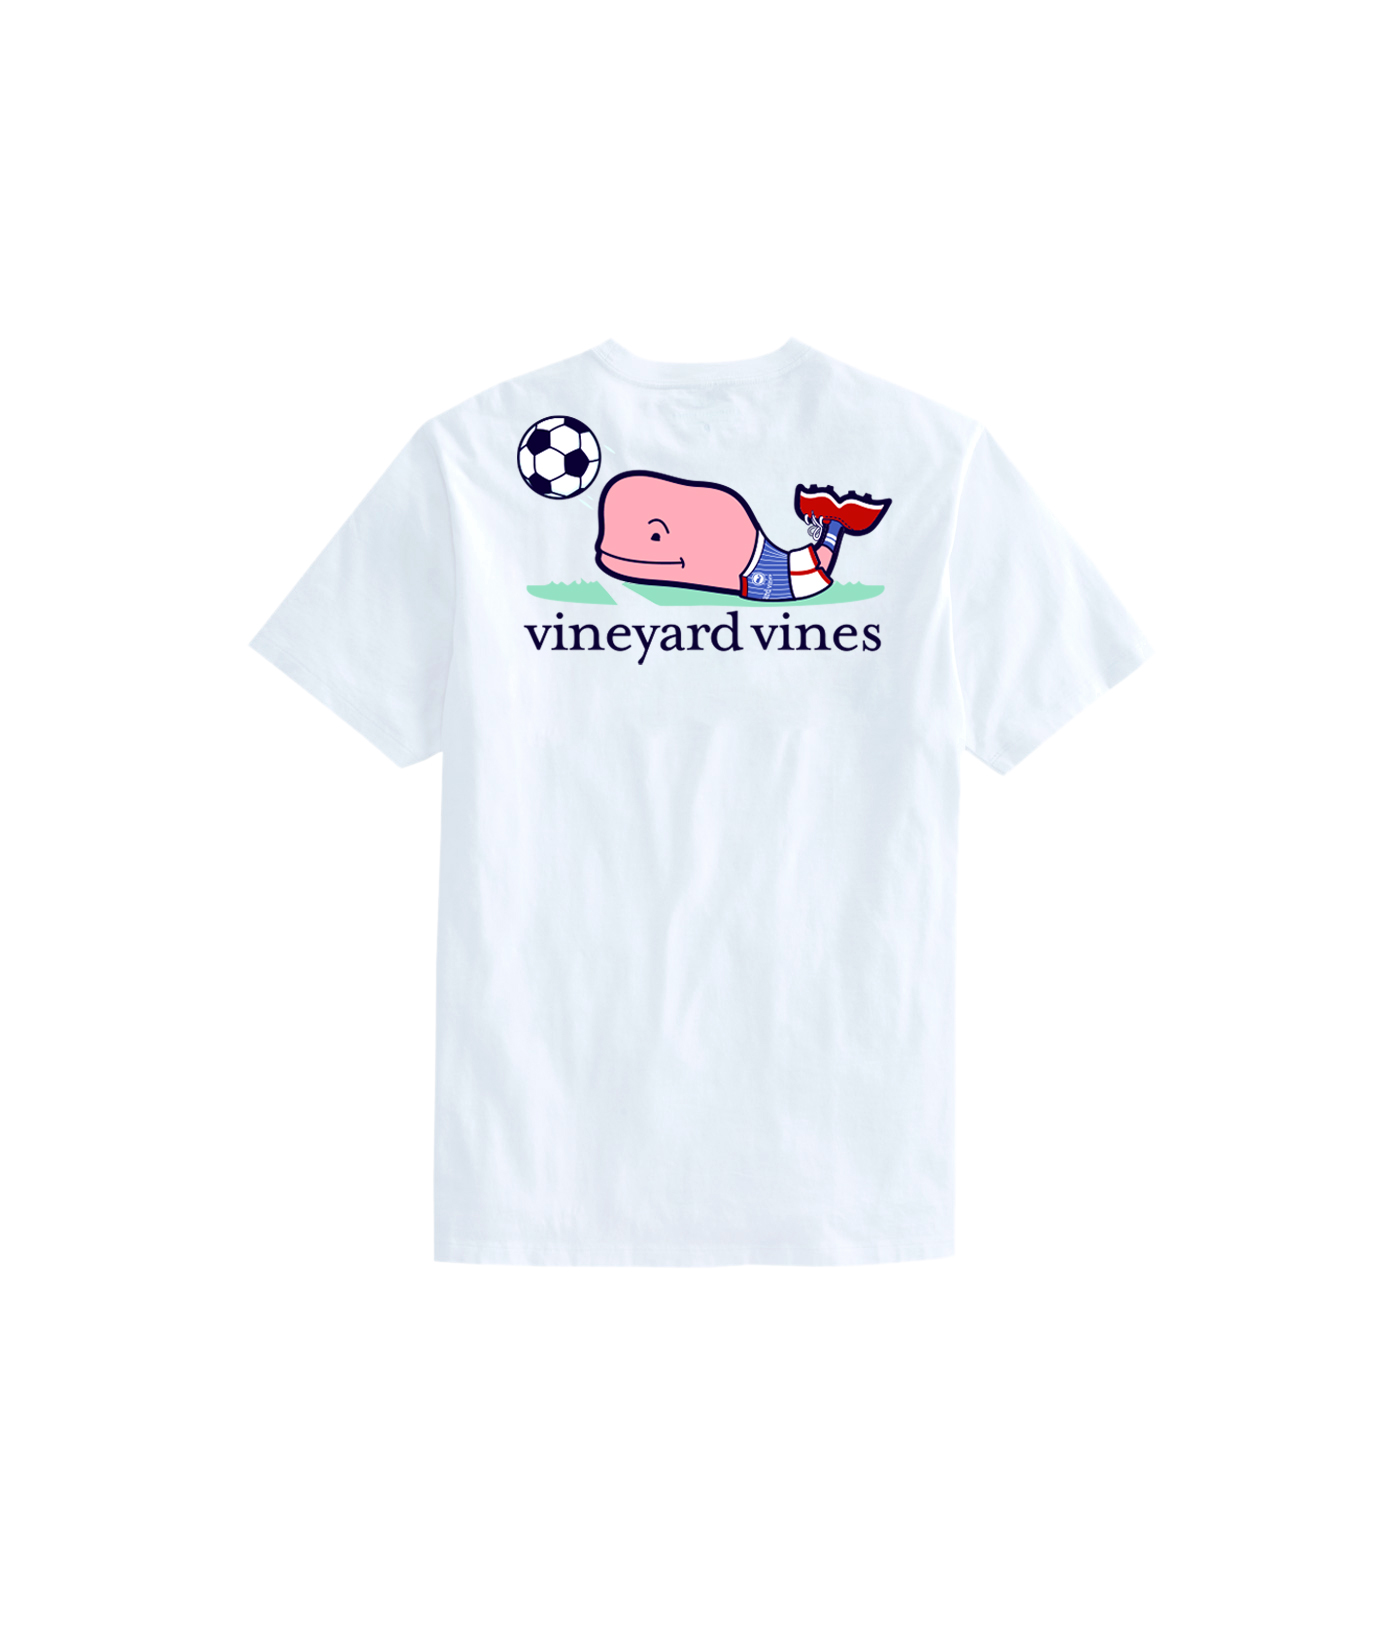 Vineyard Vines Chicas L/S White Cap America Taza 2017 Camiseta con Capucha 